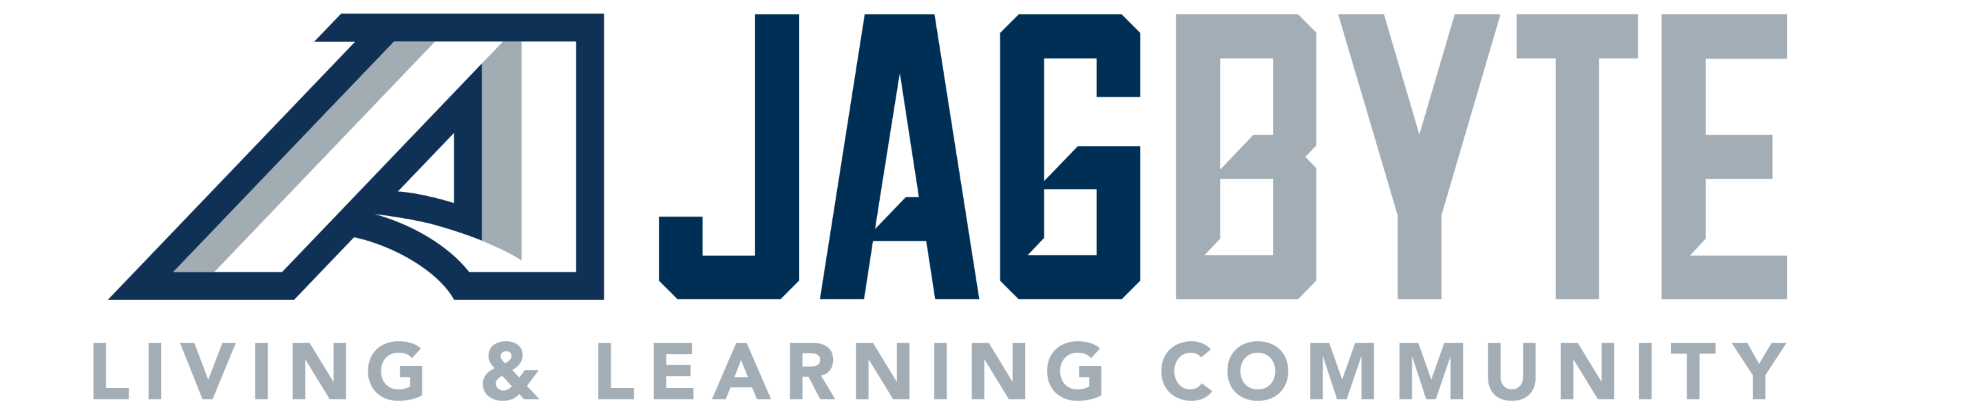 JagByte LLC program logo 